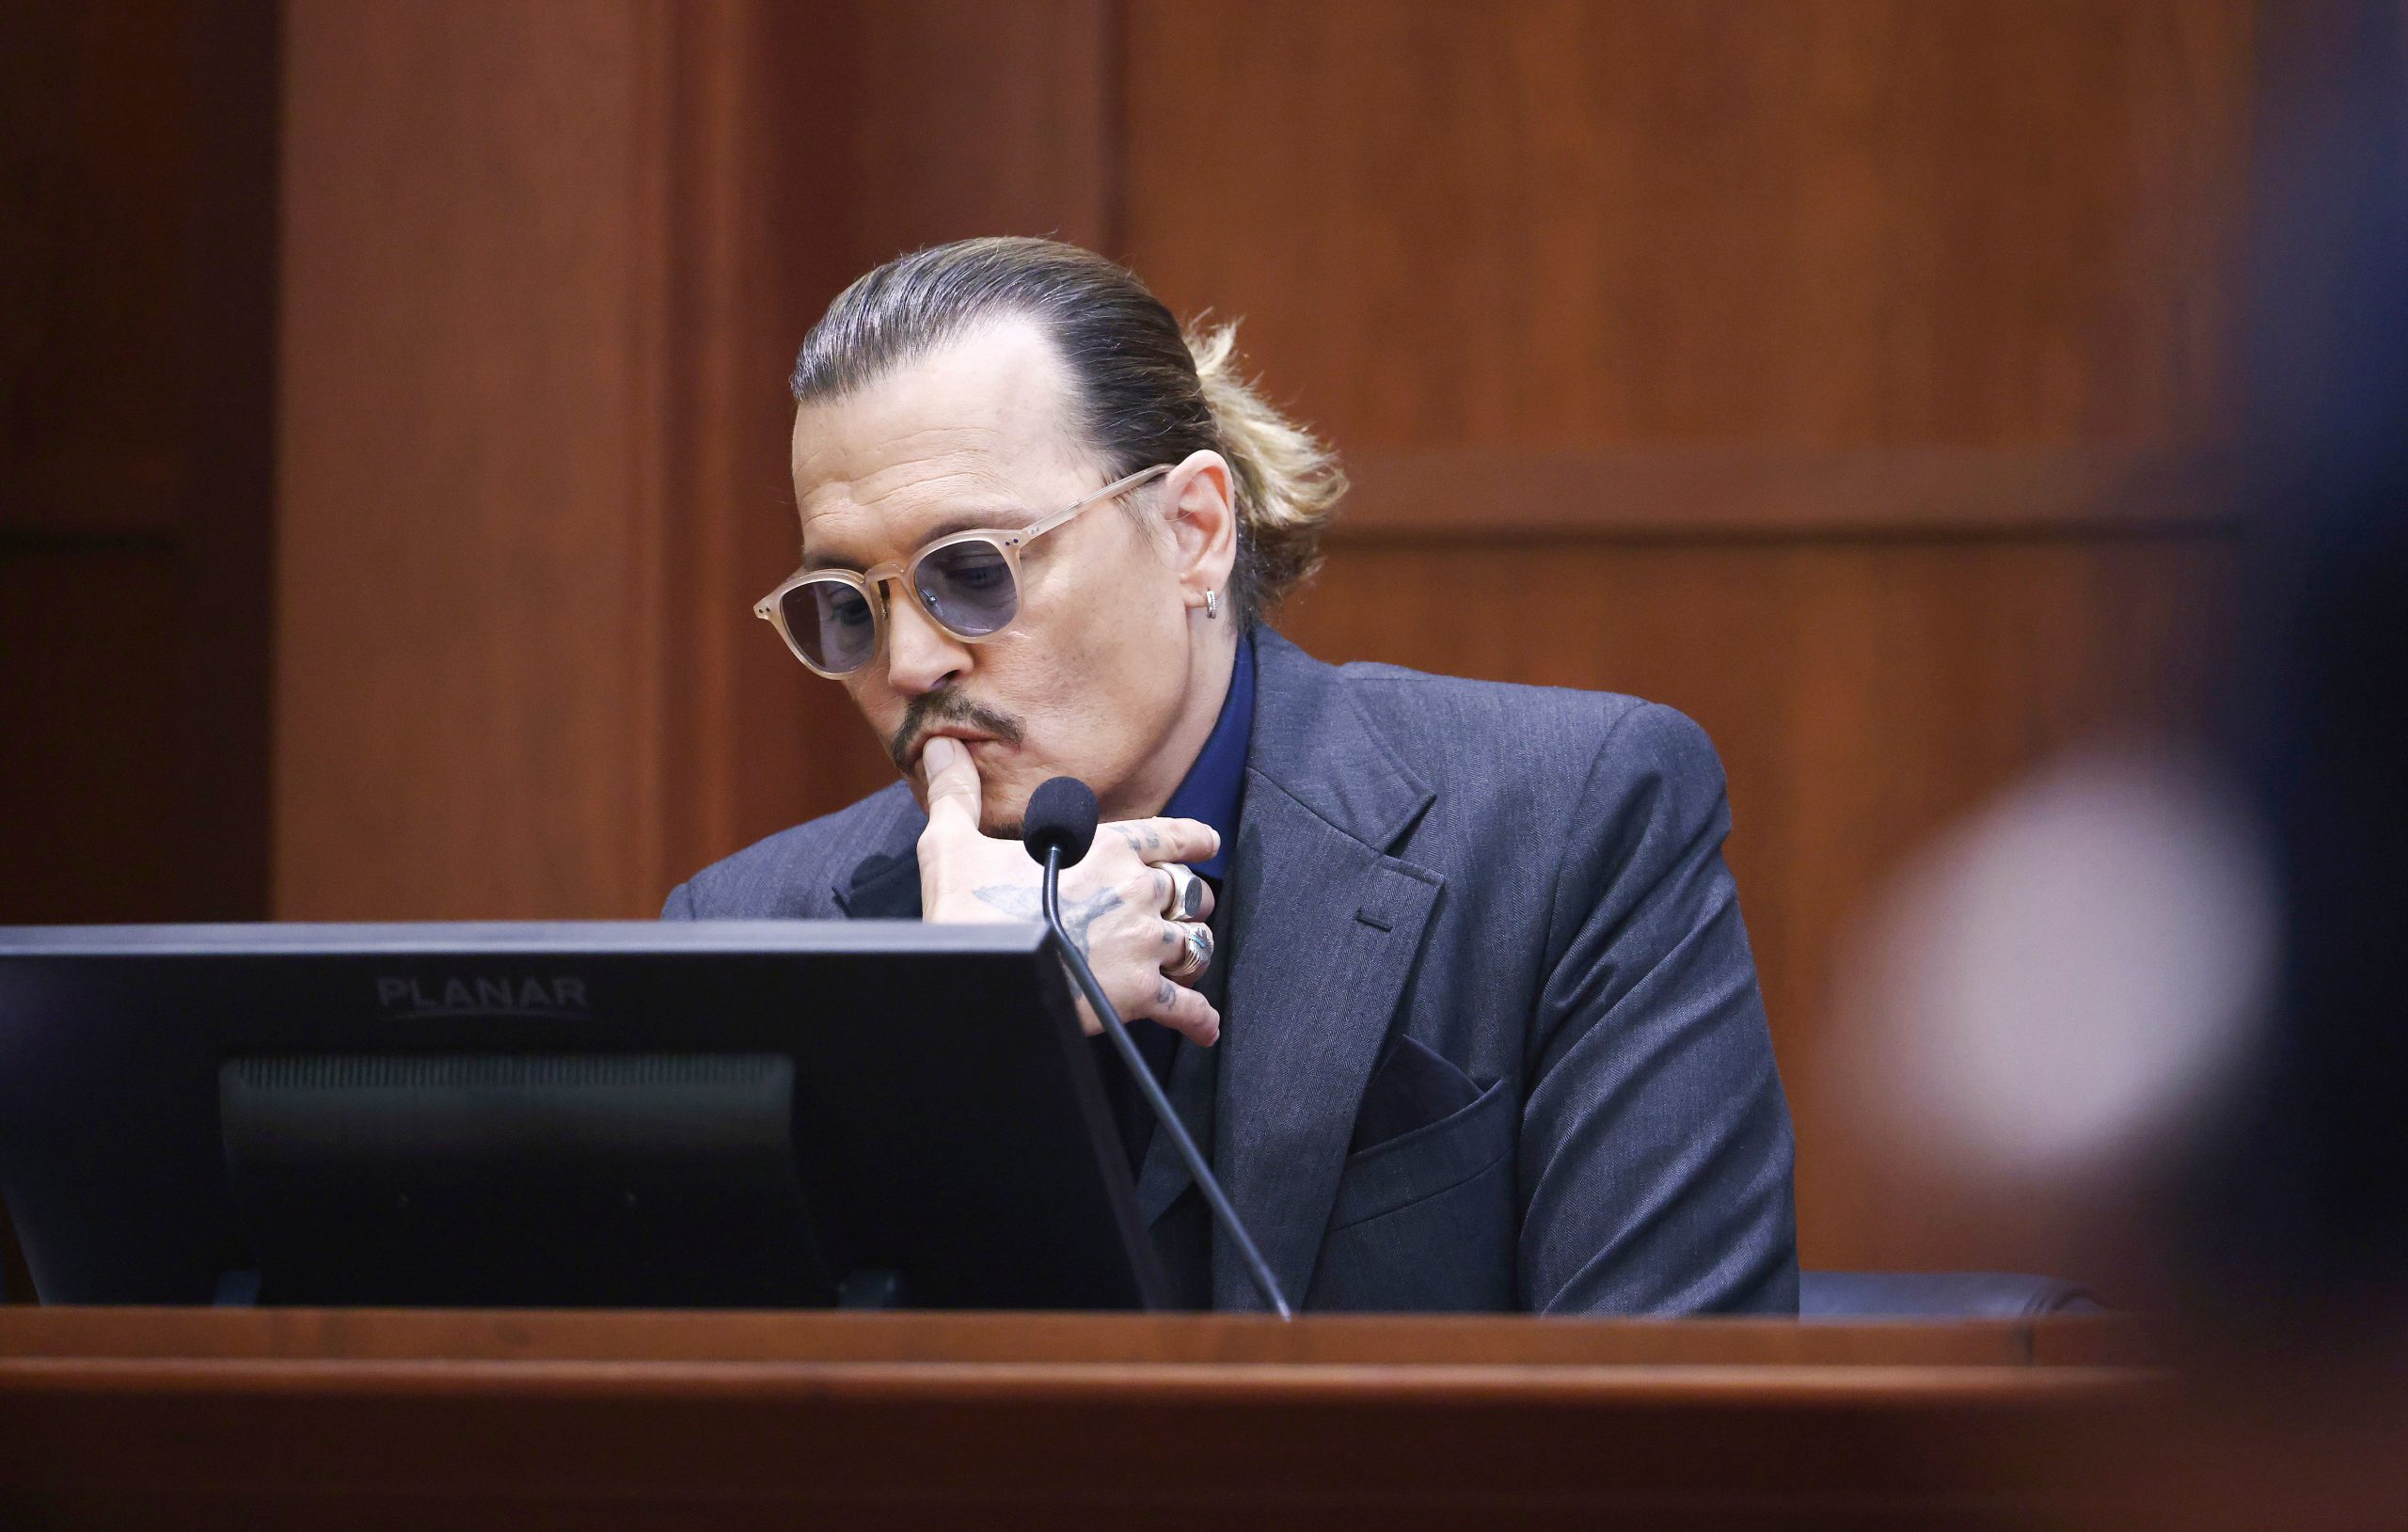 Former agent reveals why Johnny Depp’s career took a nosedive